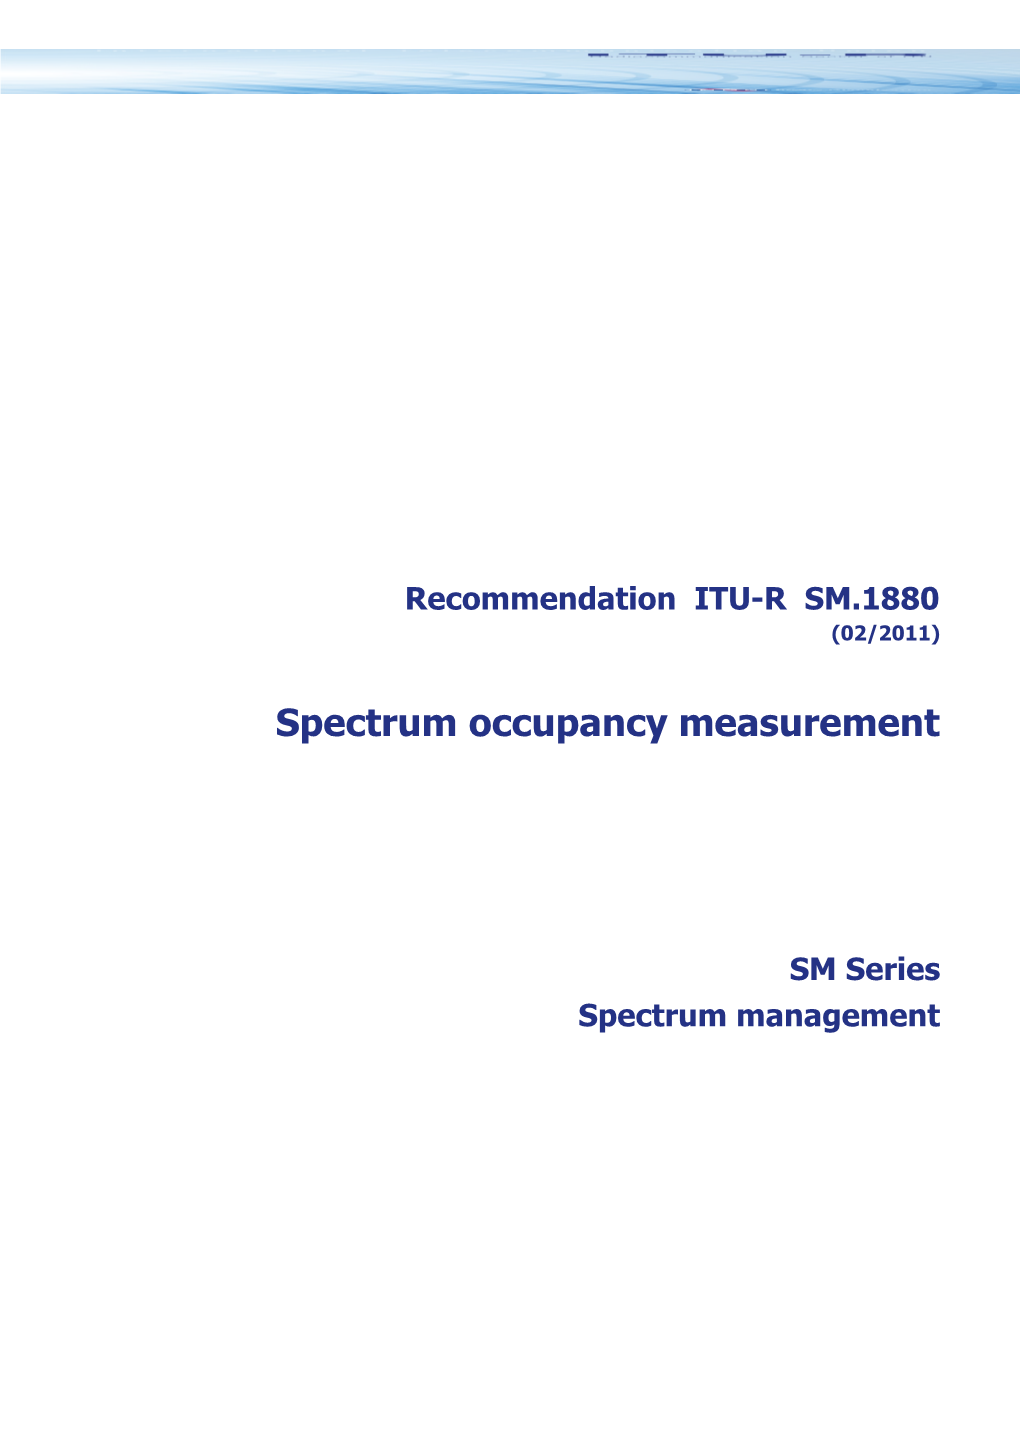 RECOMMENDATION ITU-R SM.1880 - Spectrum Occupancy Measurement